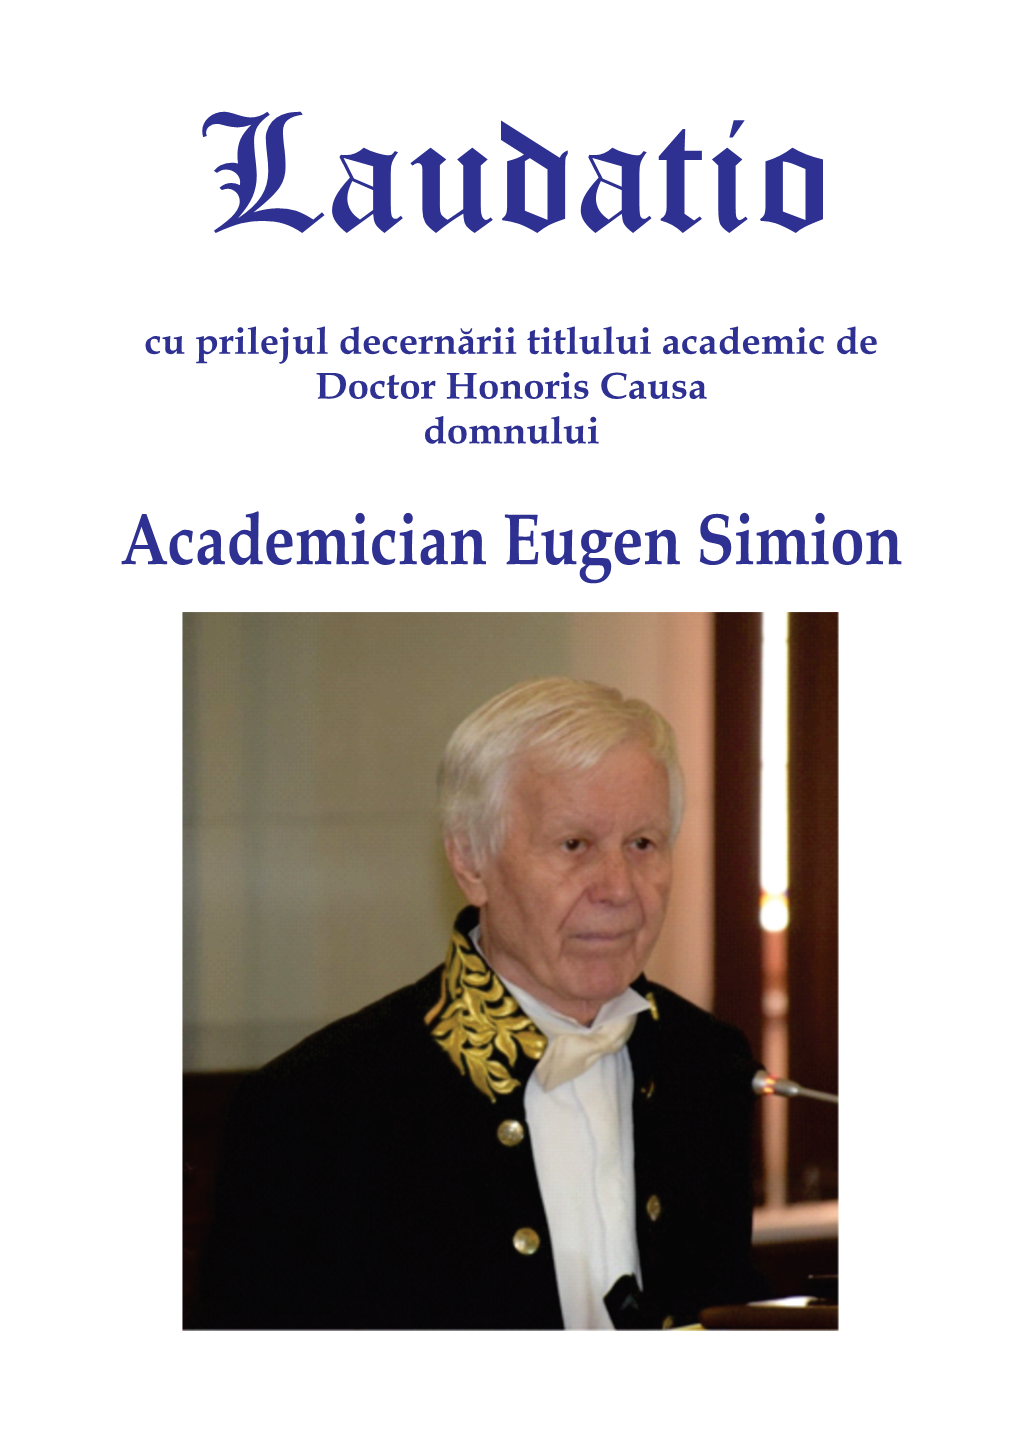 Academician Eugen Simion